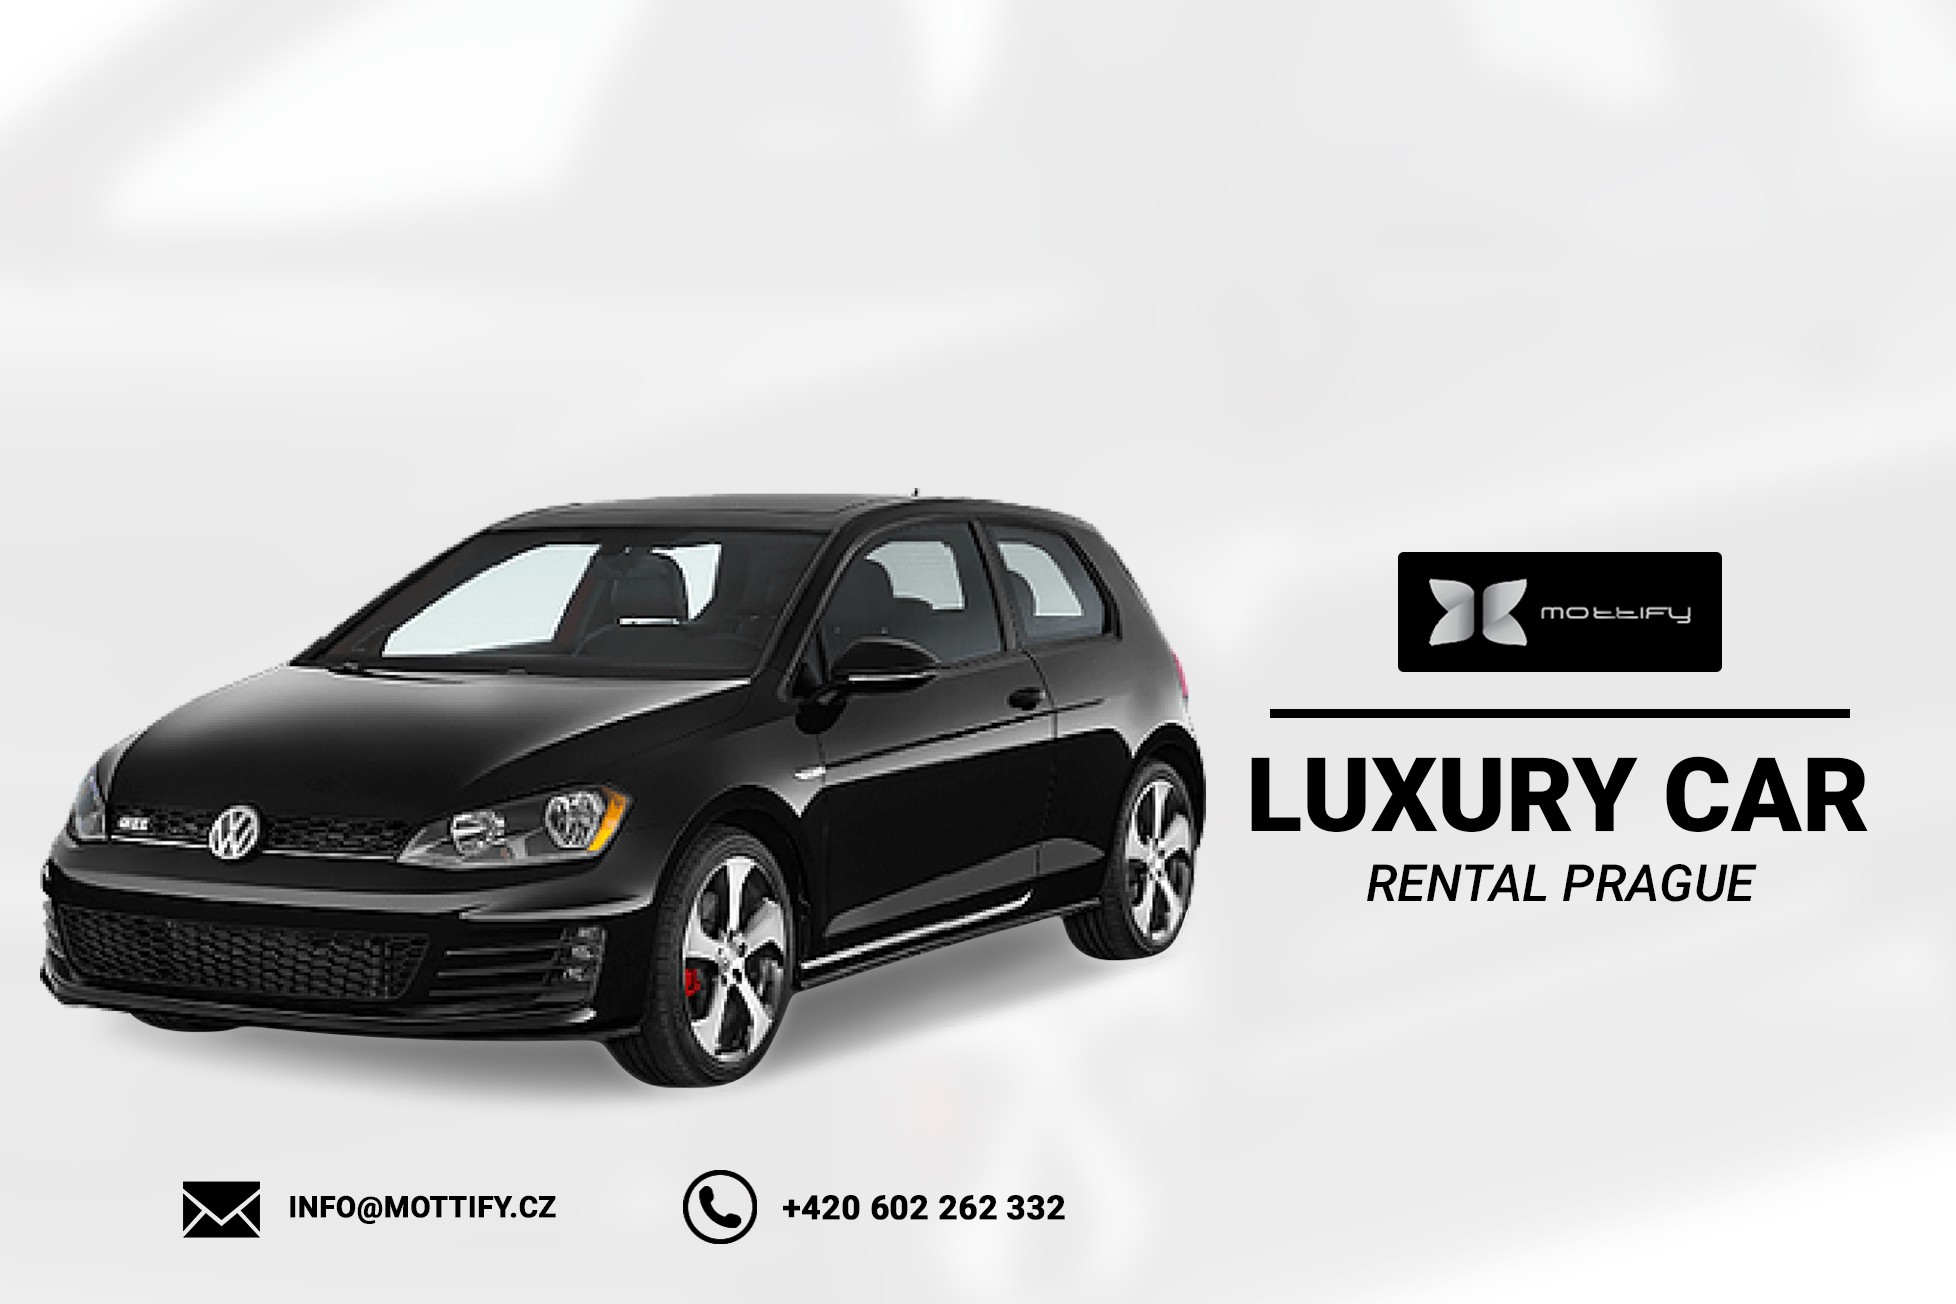 Luxury-Car-Rental-Prague